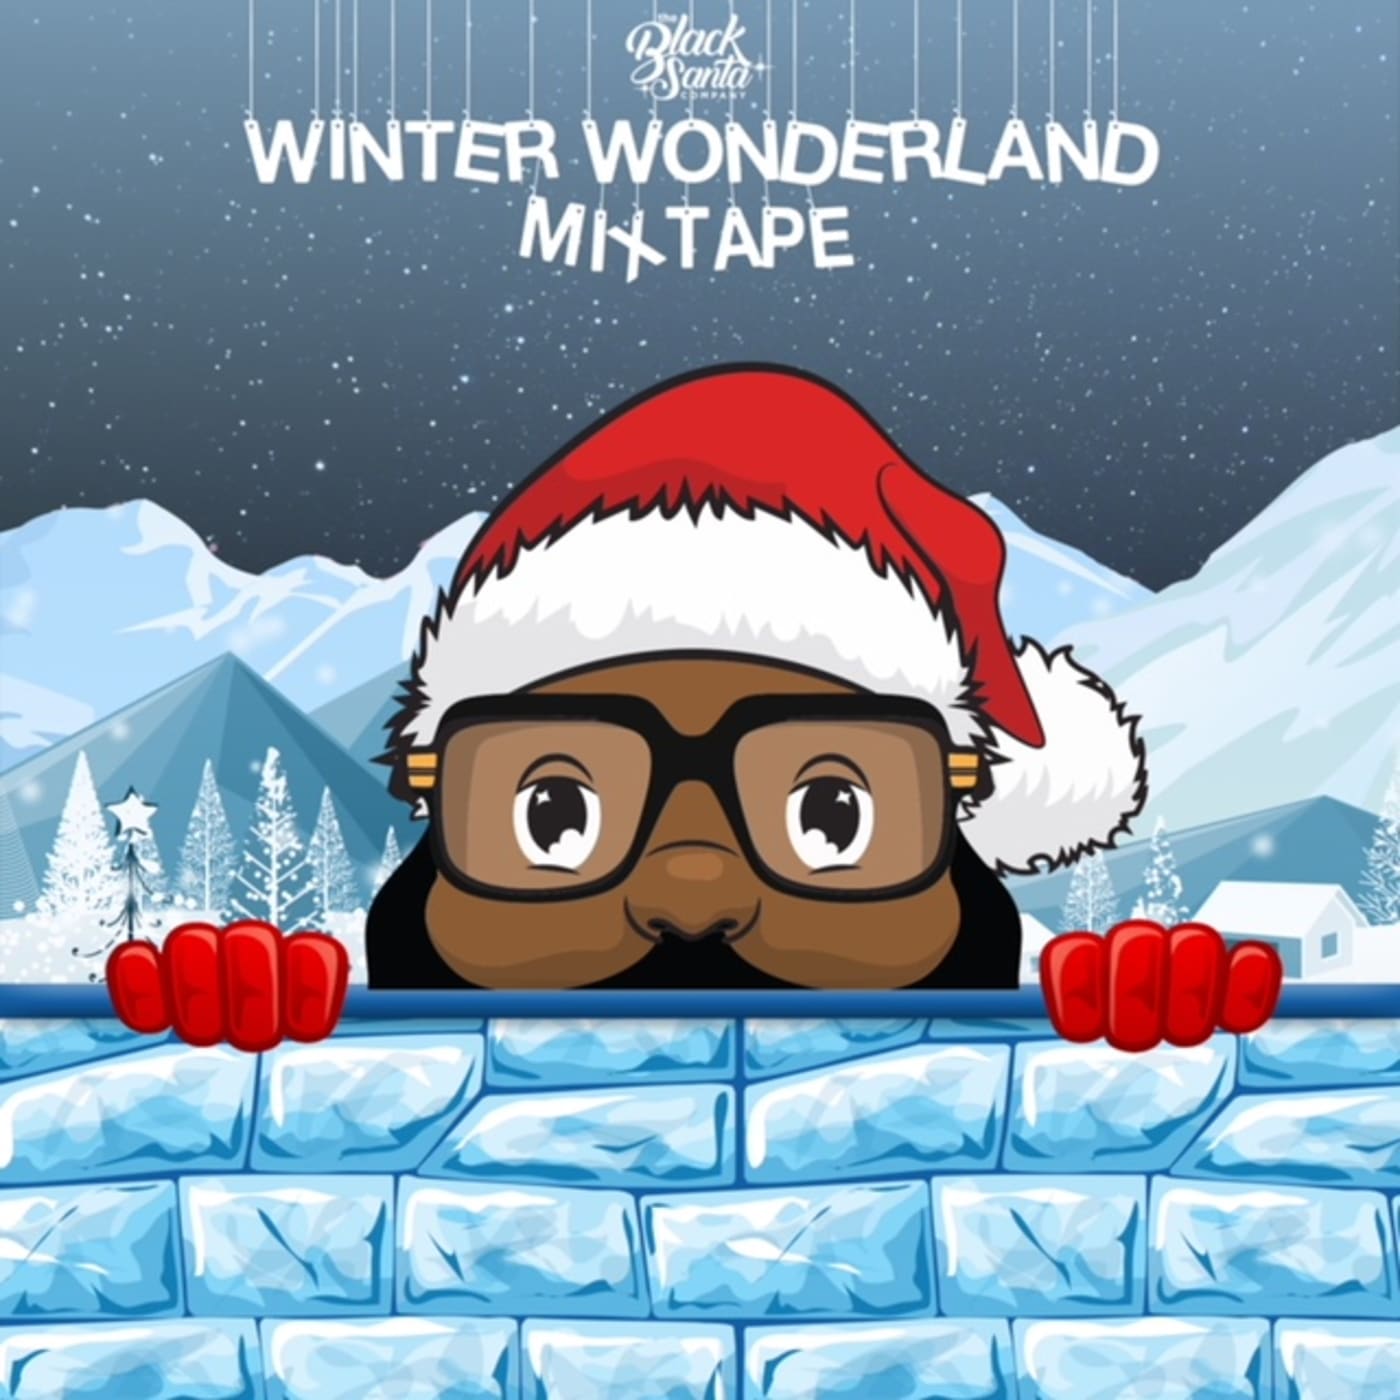 'Winter Wonderland' mixtape.